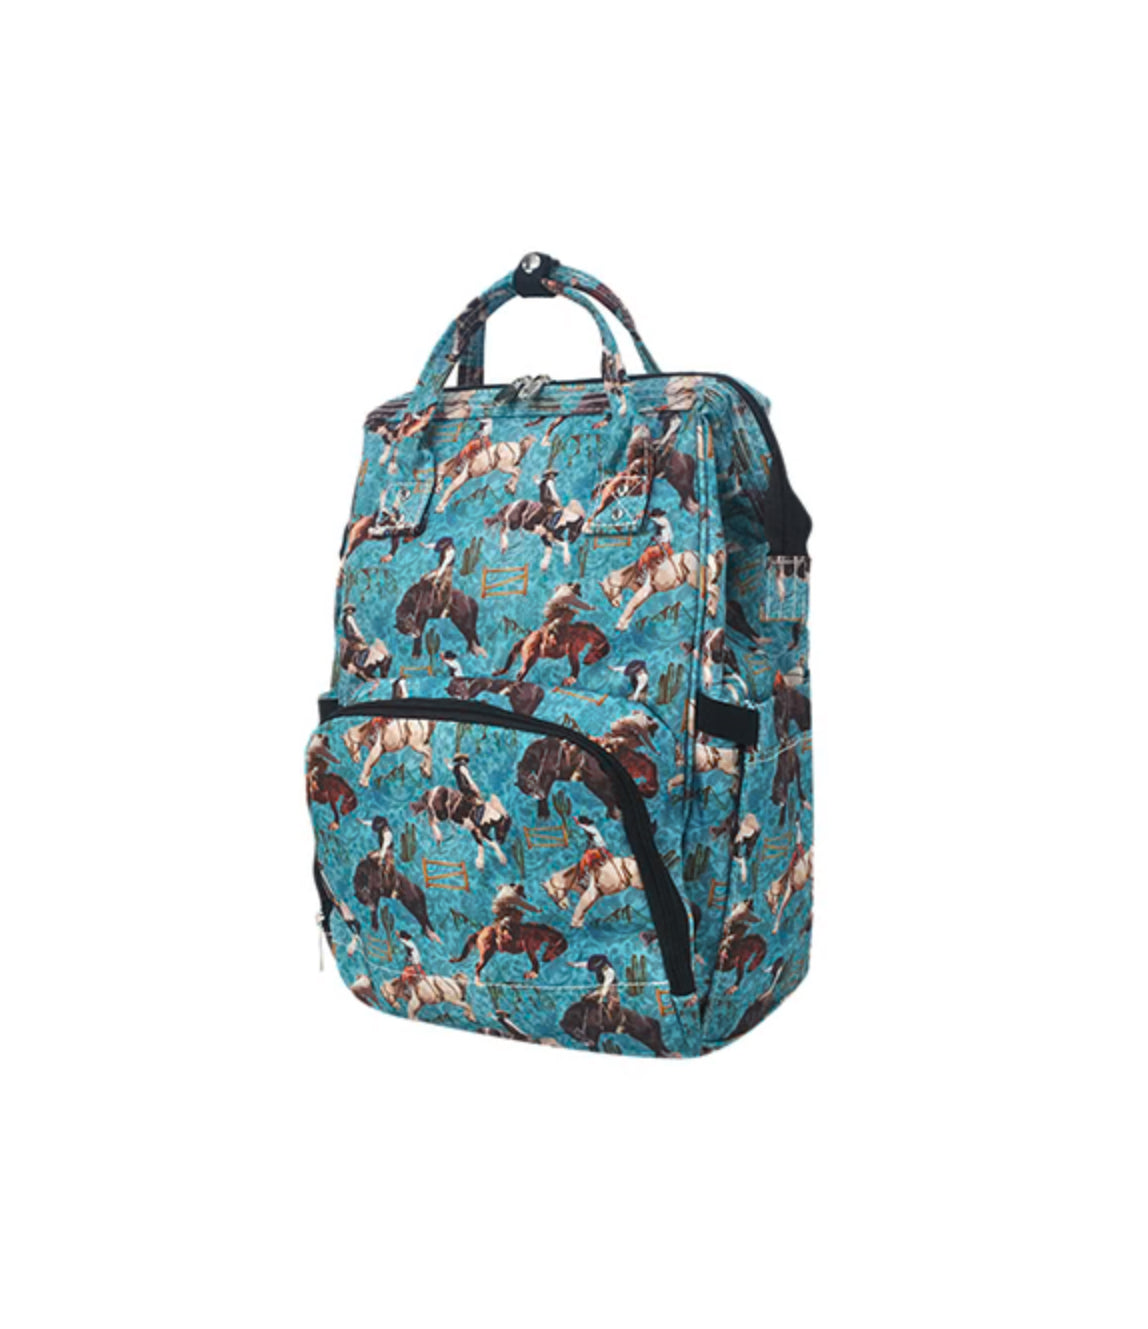 Giddy Up Travel/Diaper Bag